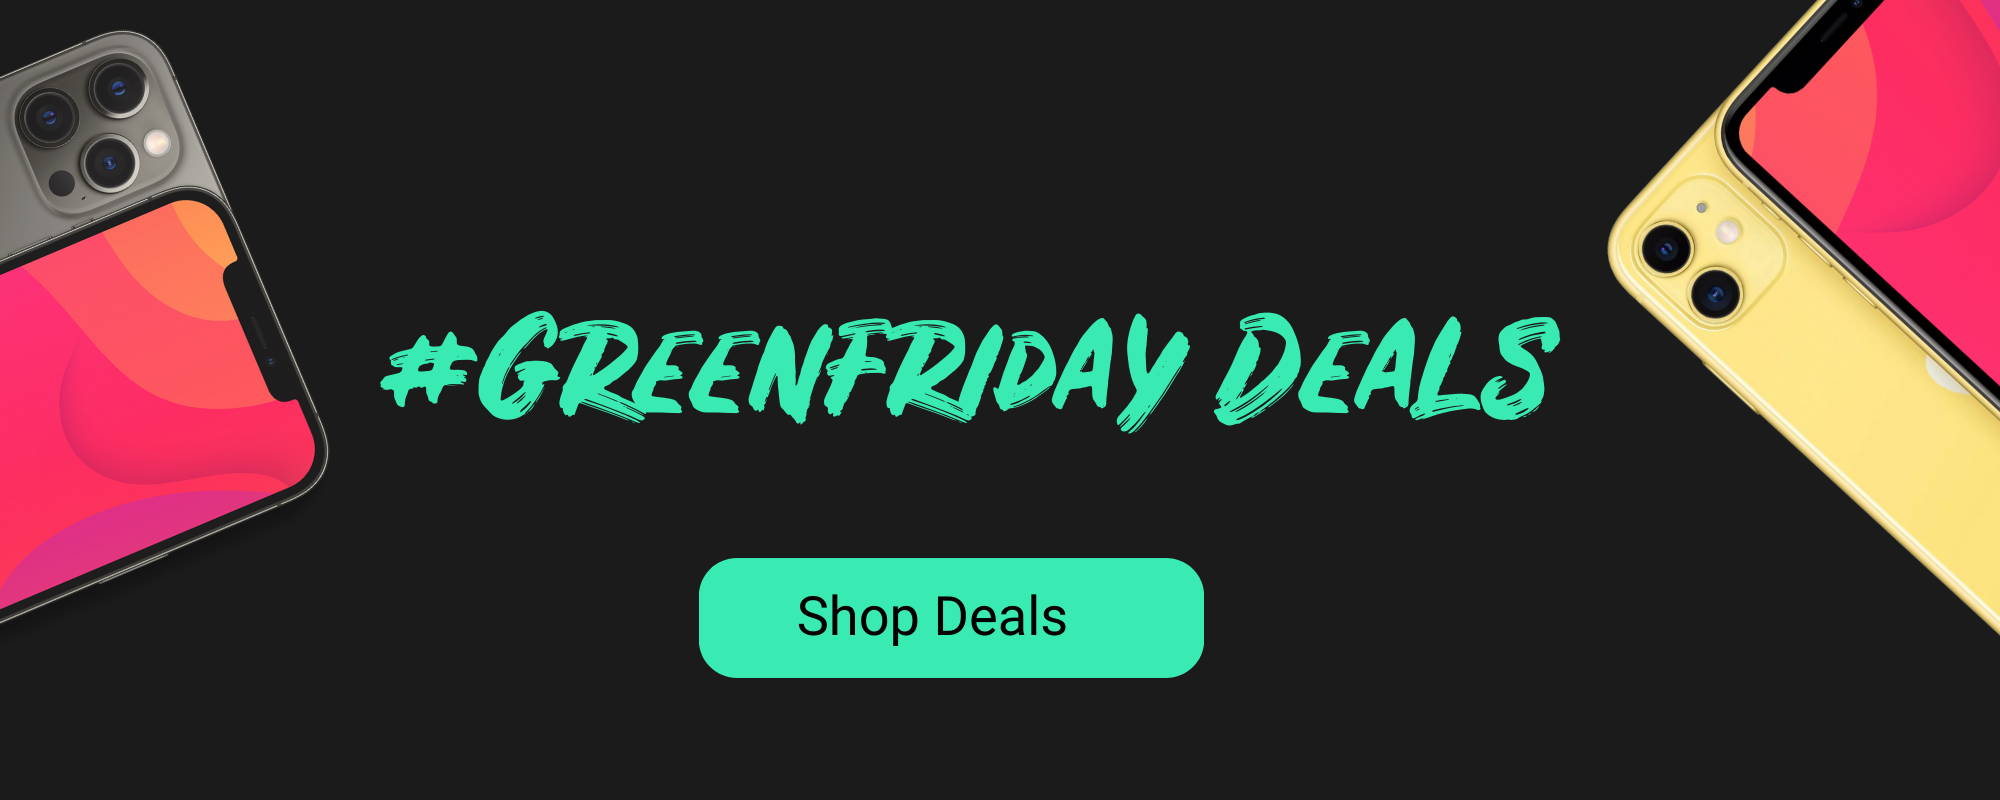 Green Friday Deals